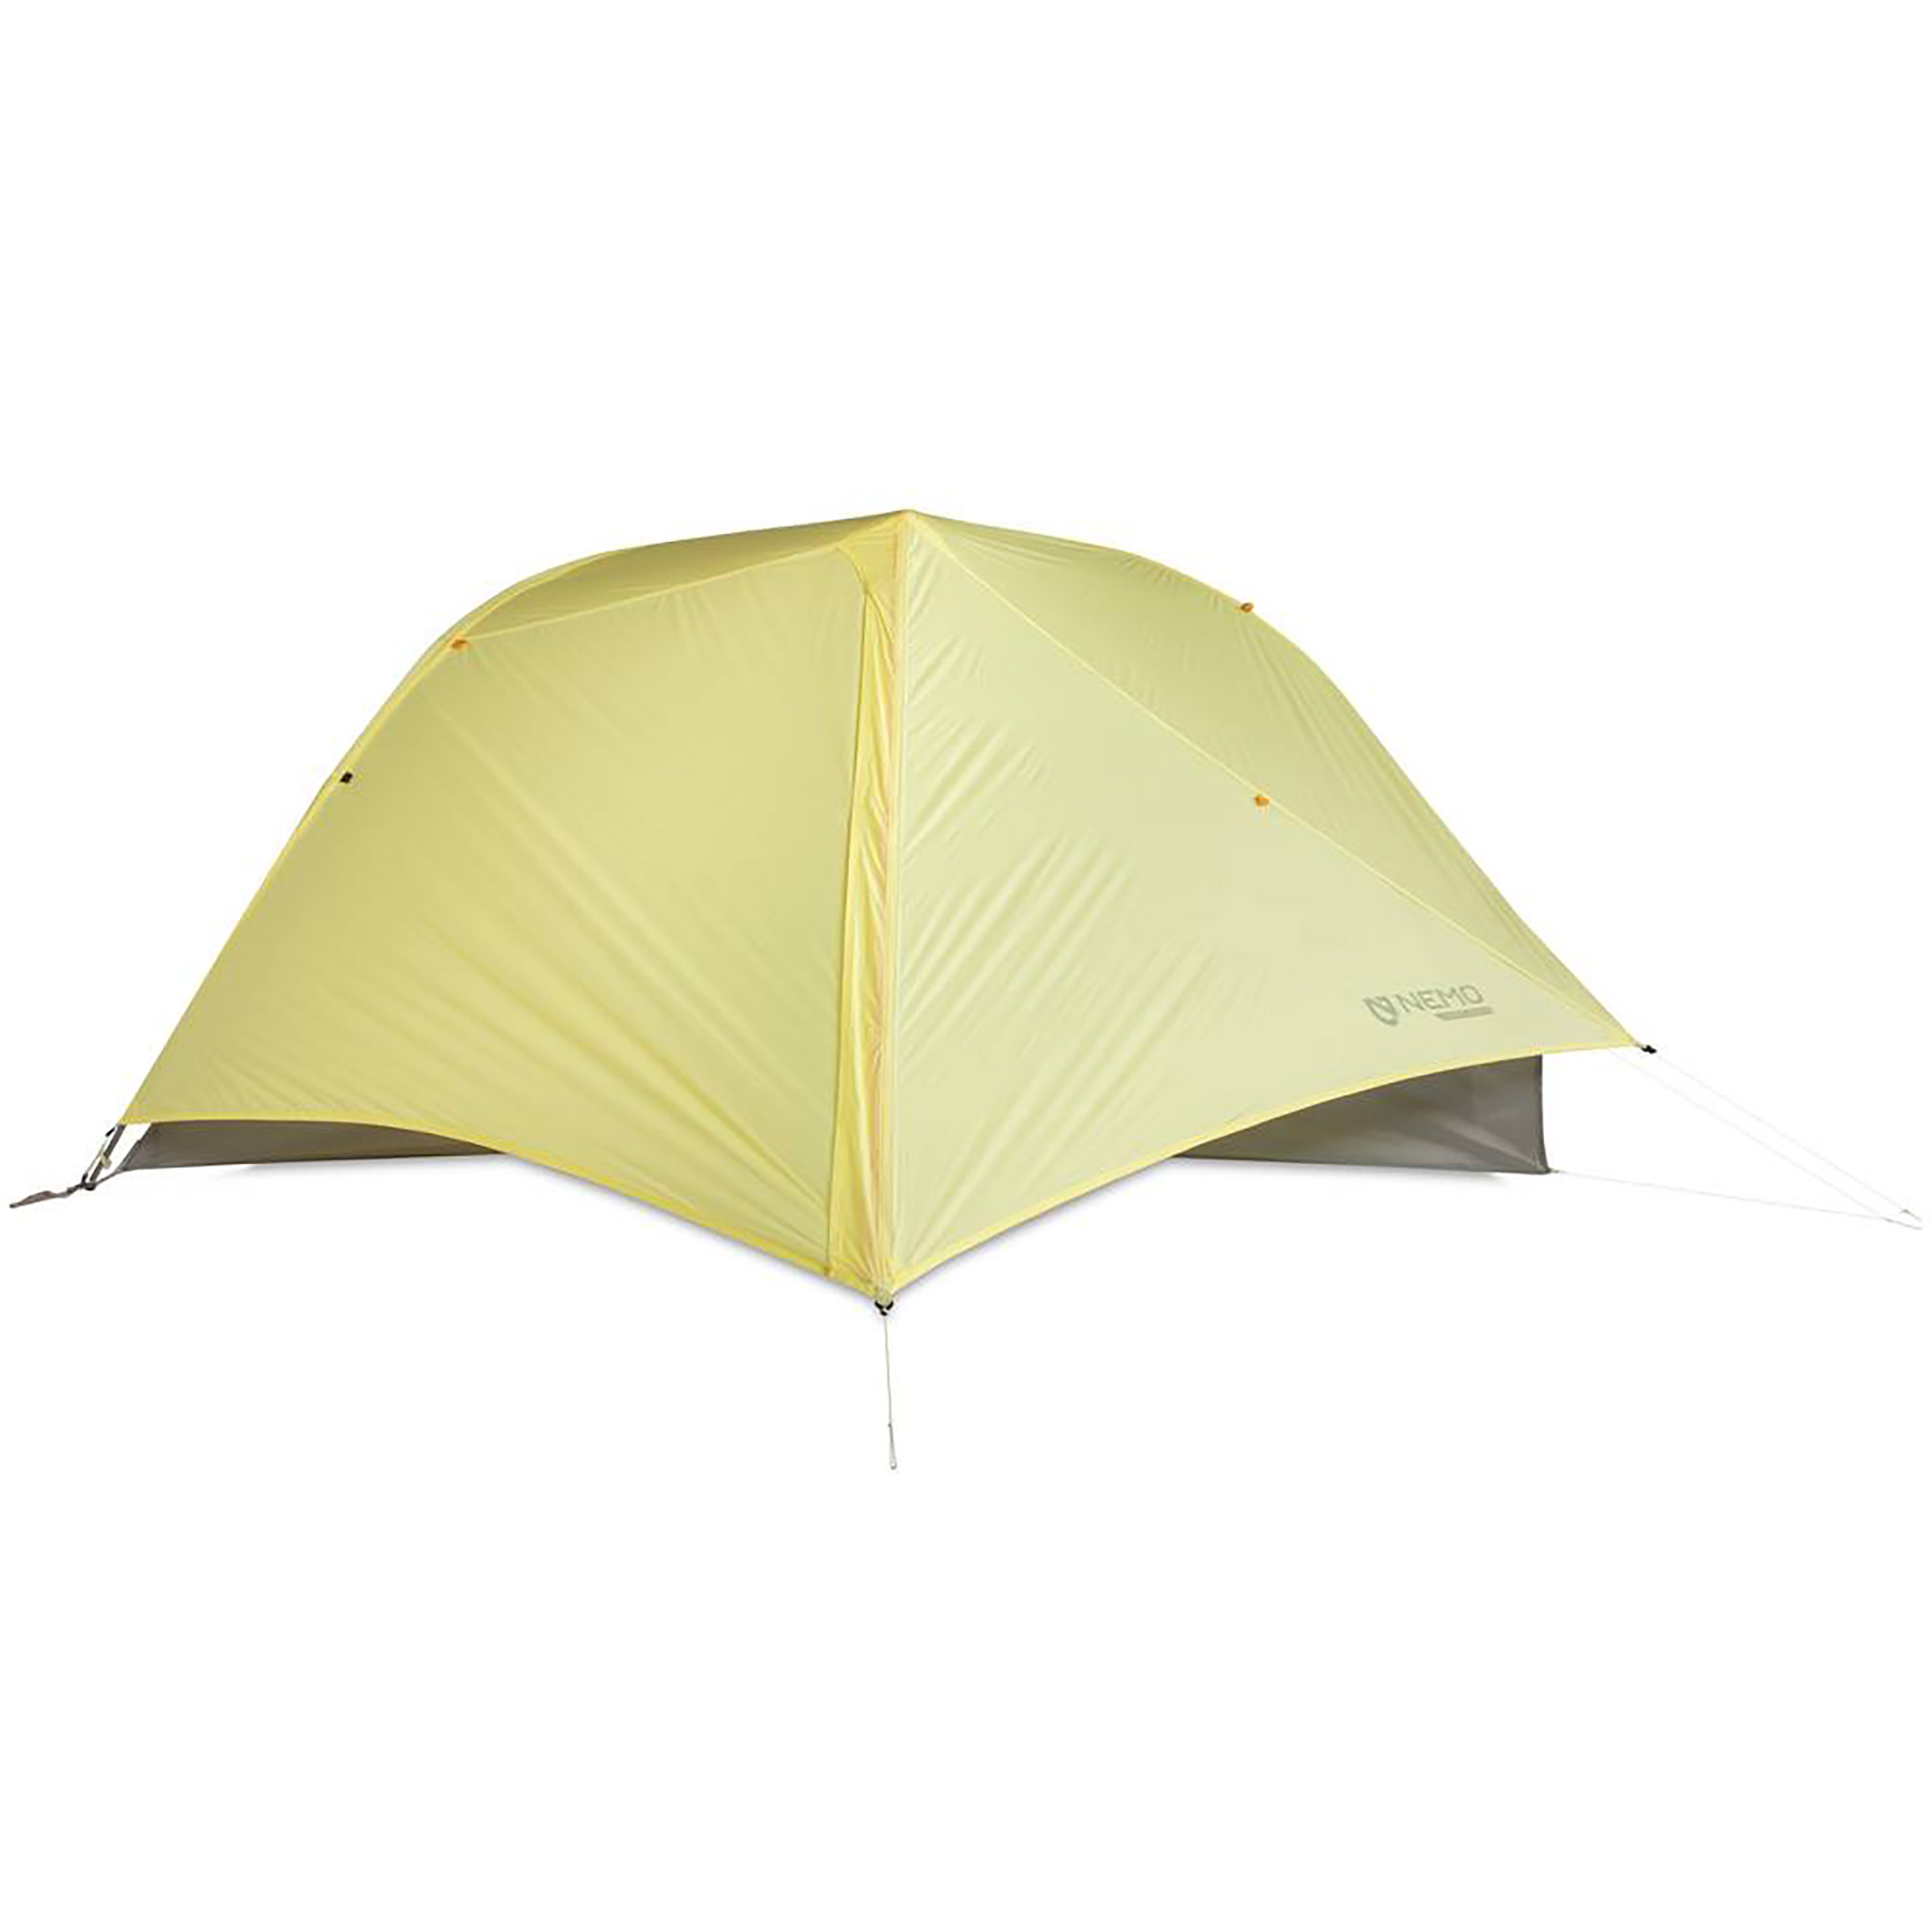 Nemo Mayfly OSMO 3P Ultralight Backpacking Tent